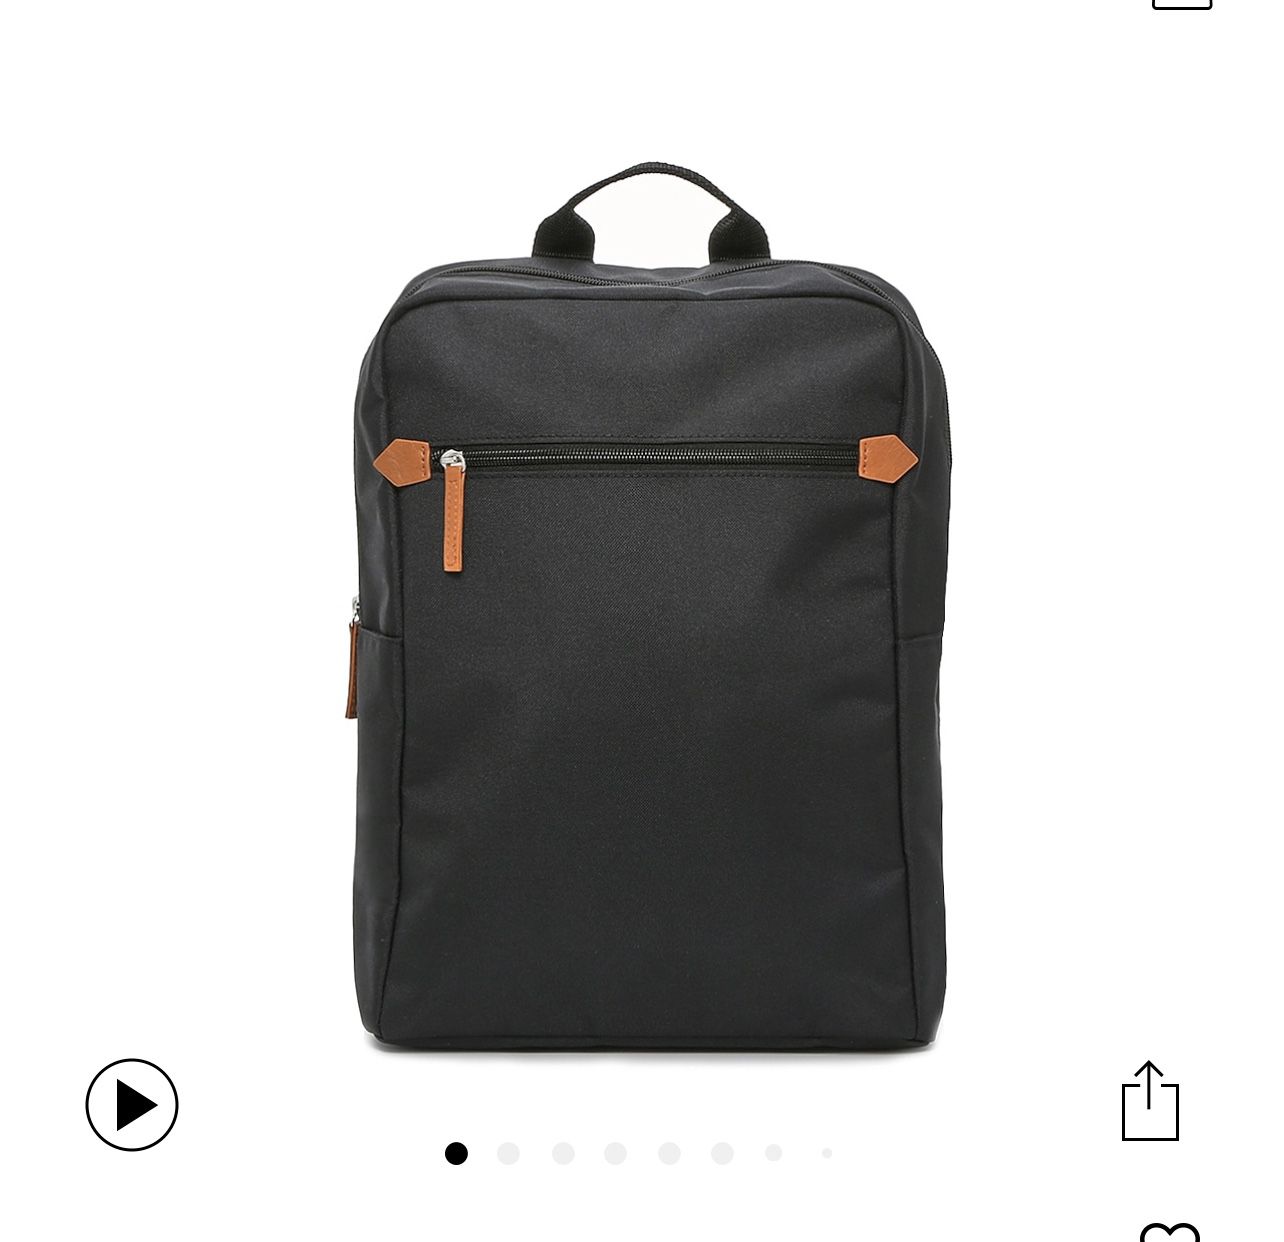 Brand New Black Backpack with brown leather details, front zipper pocket and side pocket. Unopened, sealed package